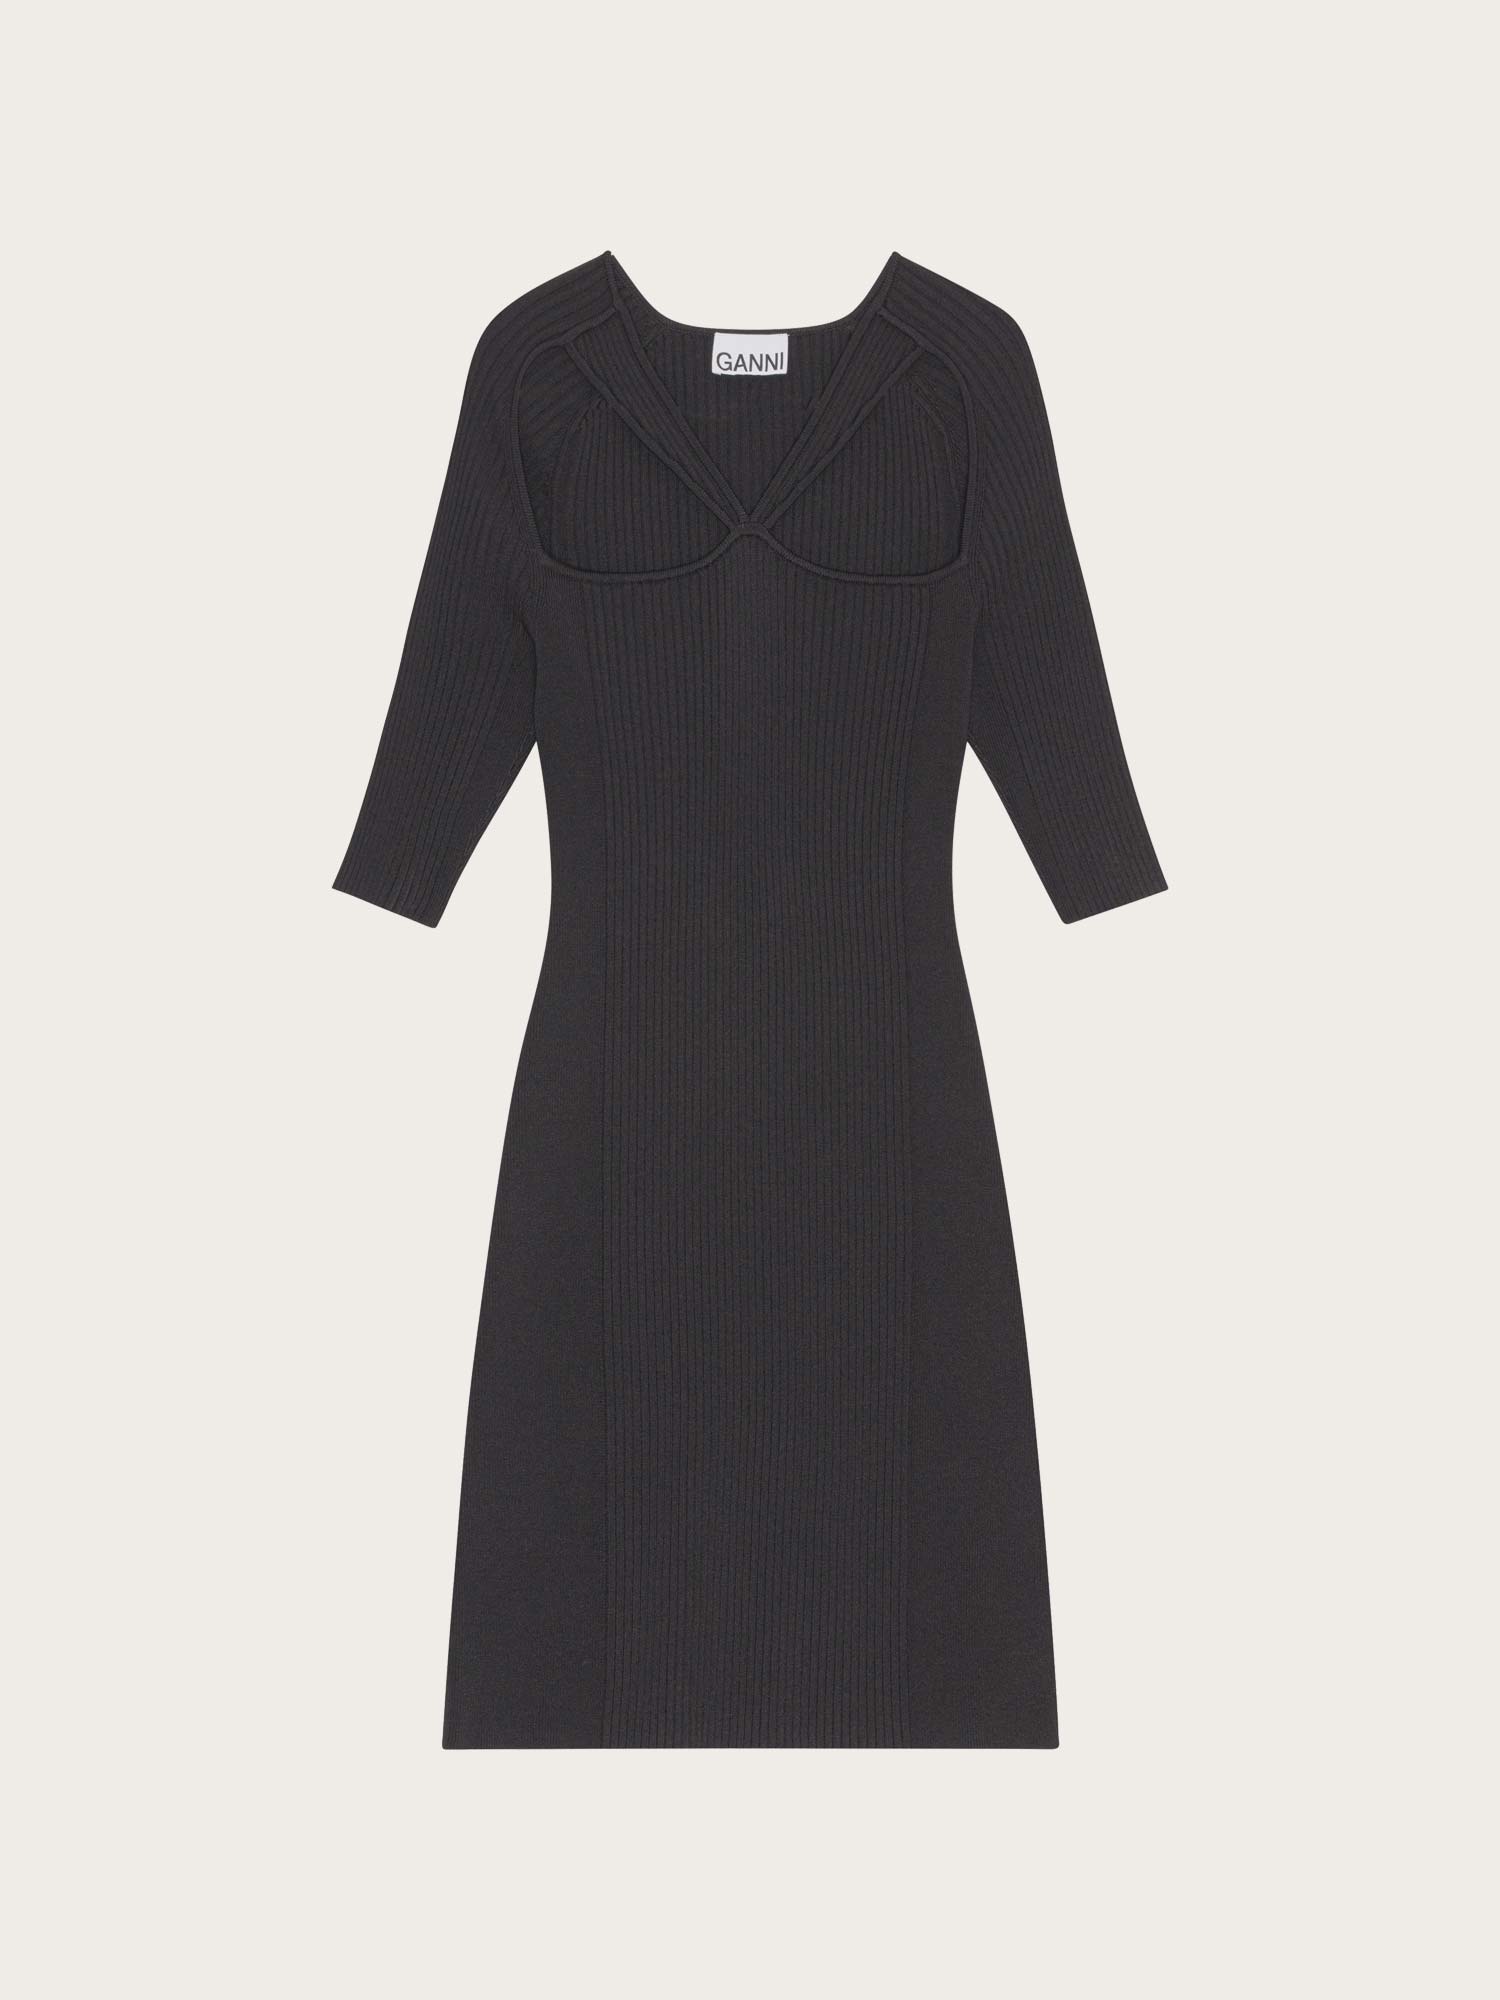 K1876 Melange Cut Out Mini Dress - Black